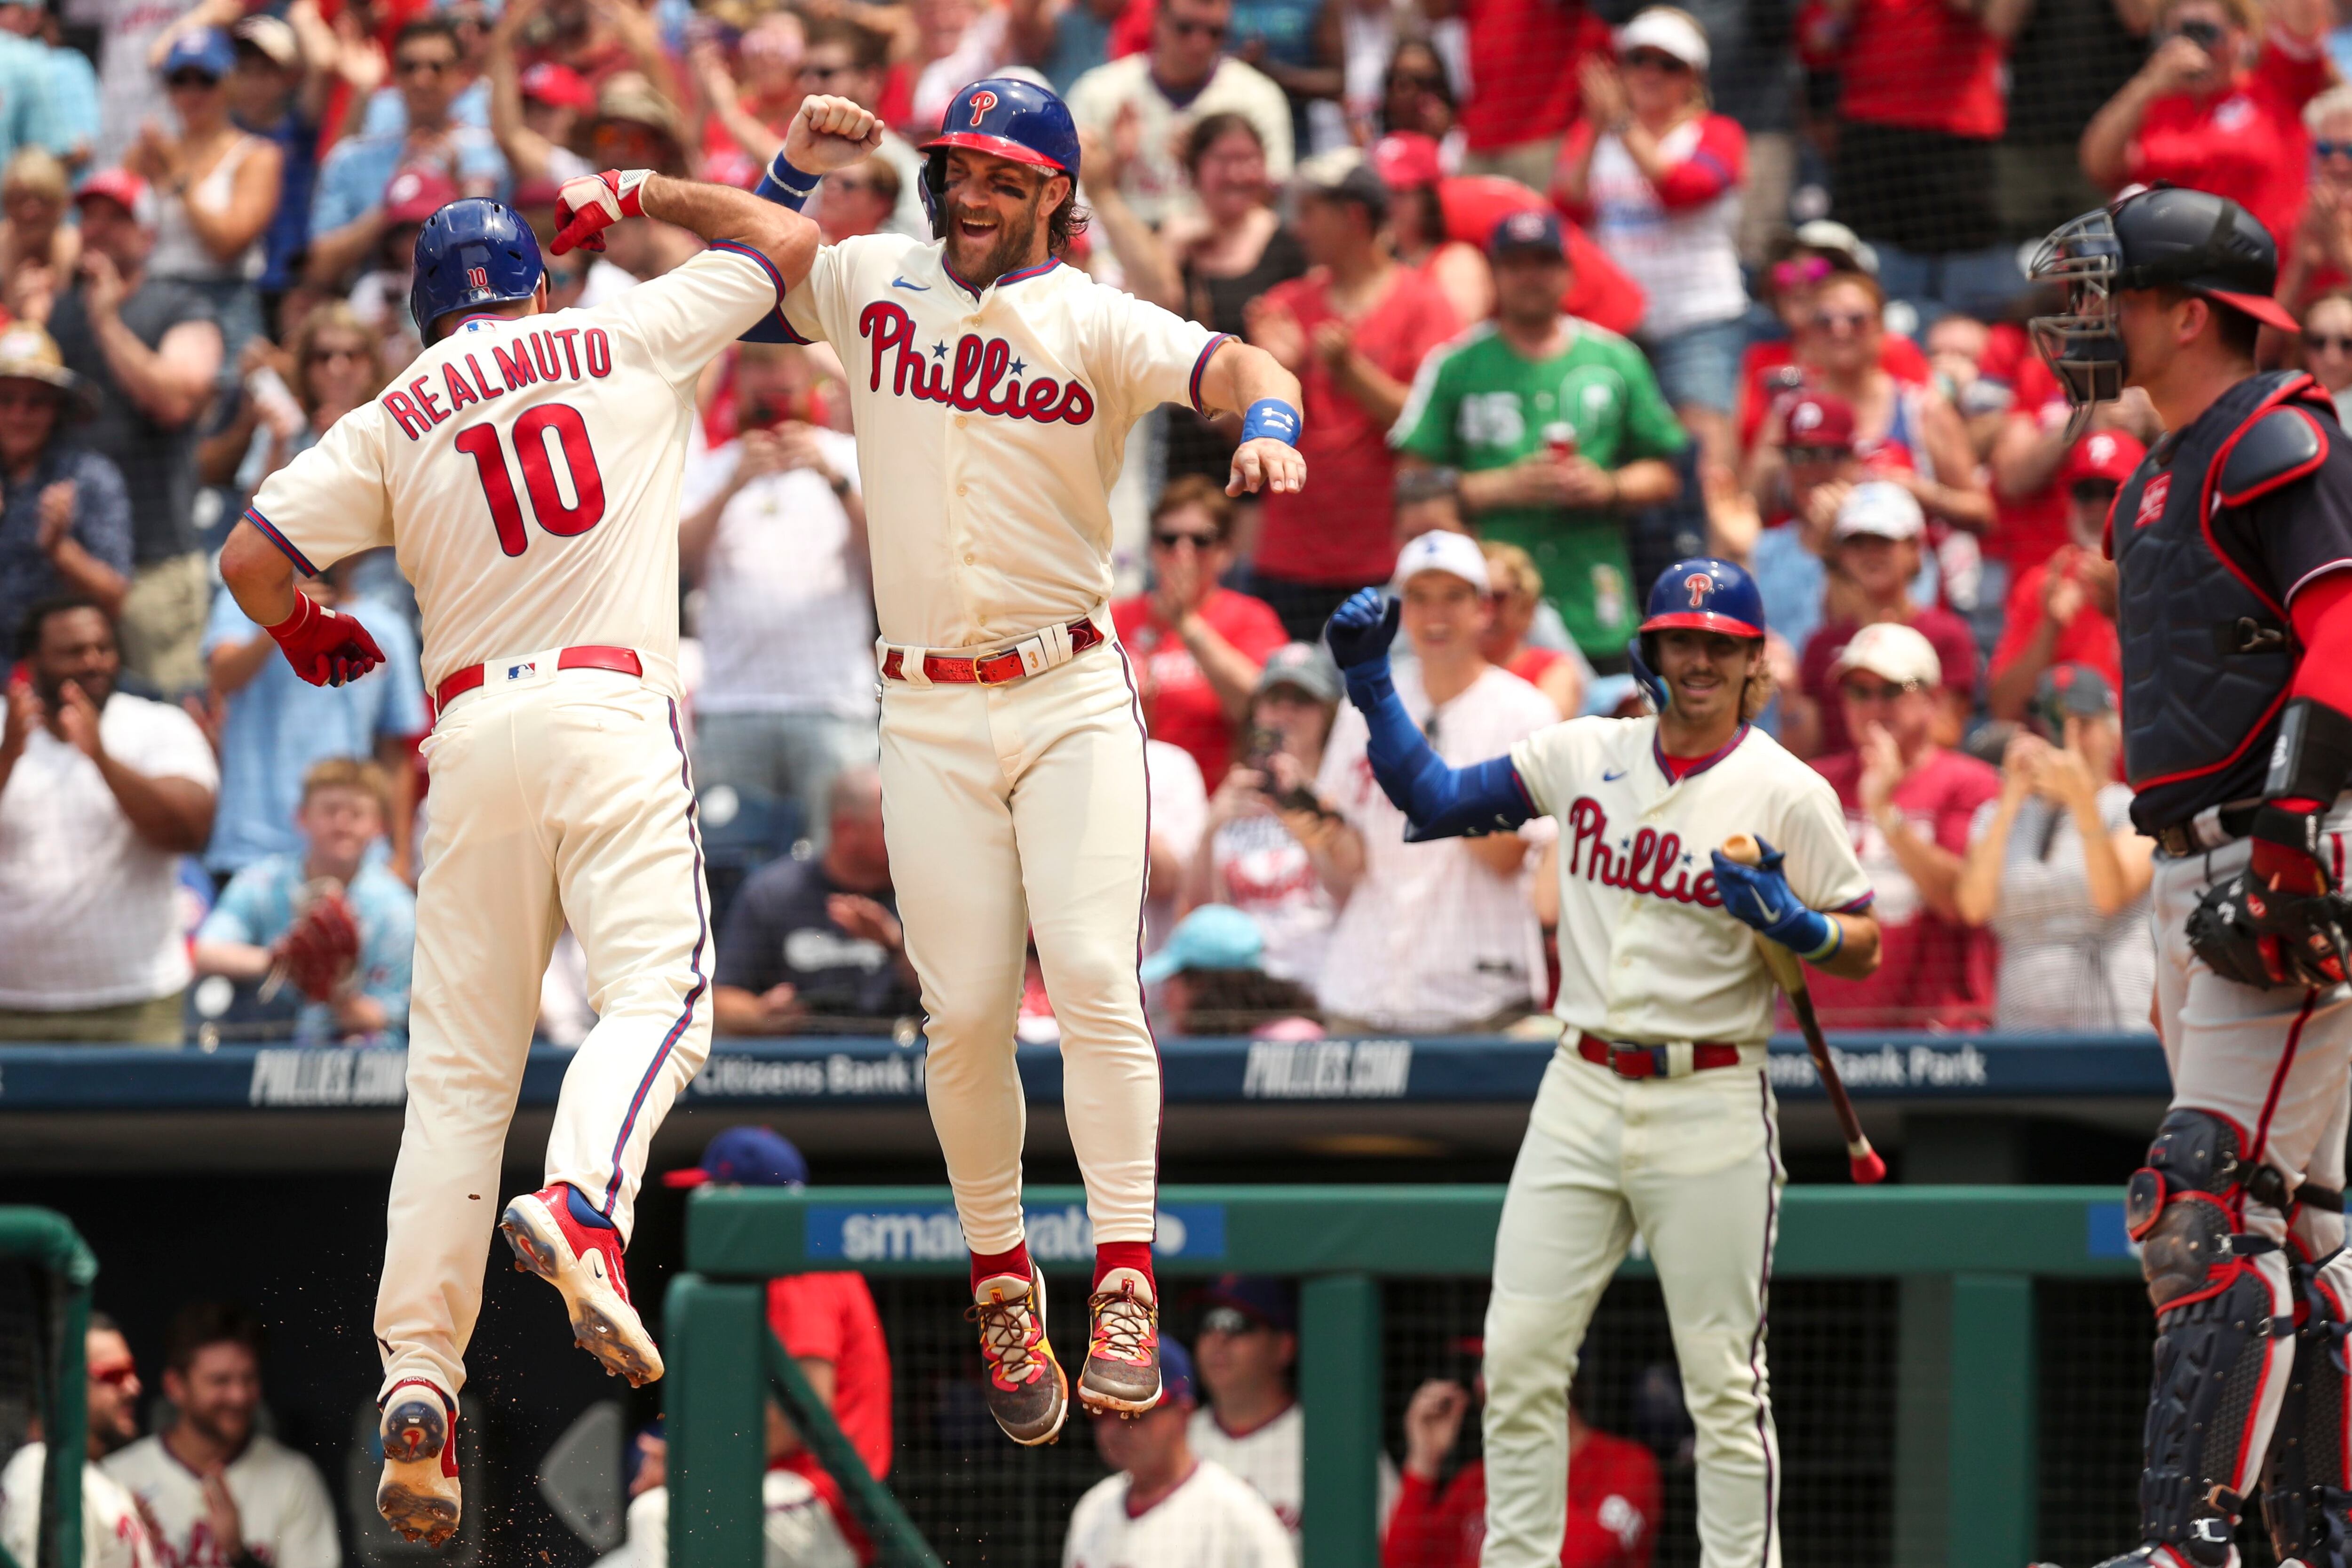 Ranger Suarez is bringing joy to Phillies fans on 2 continents – NBC Sports  Philadelphia